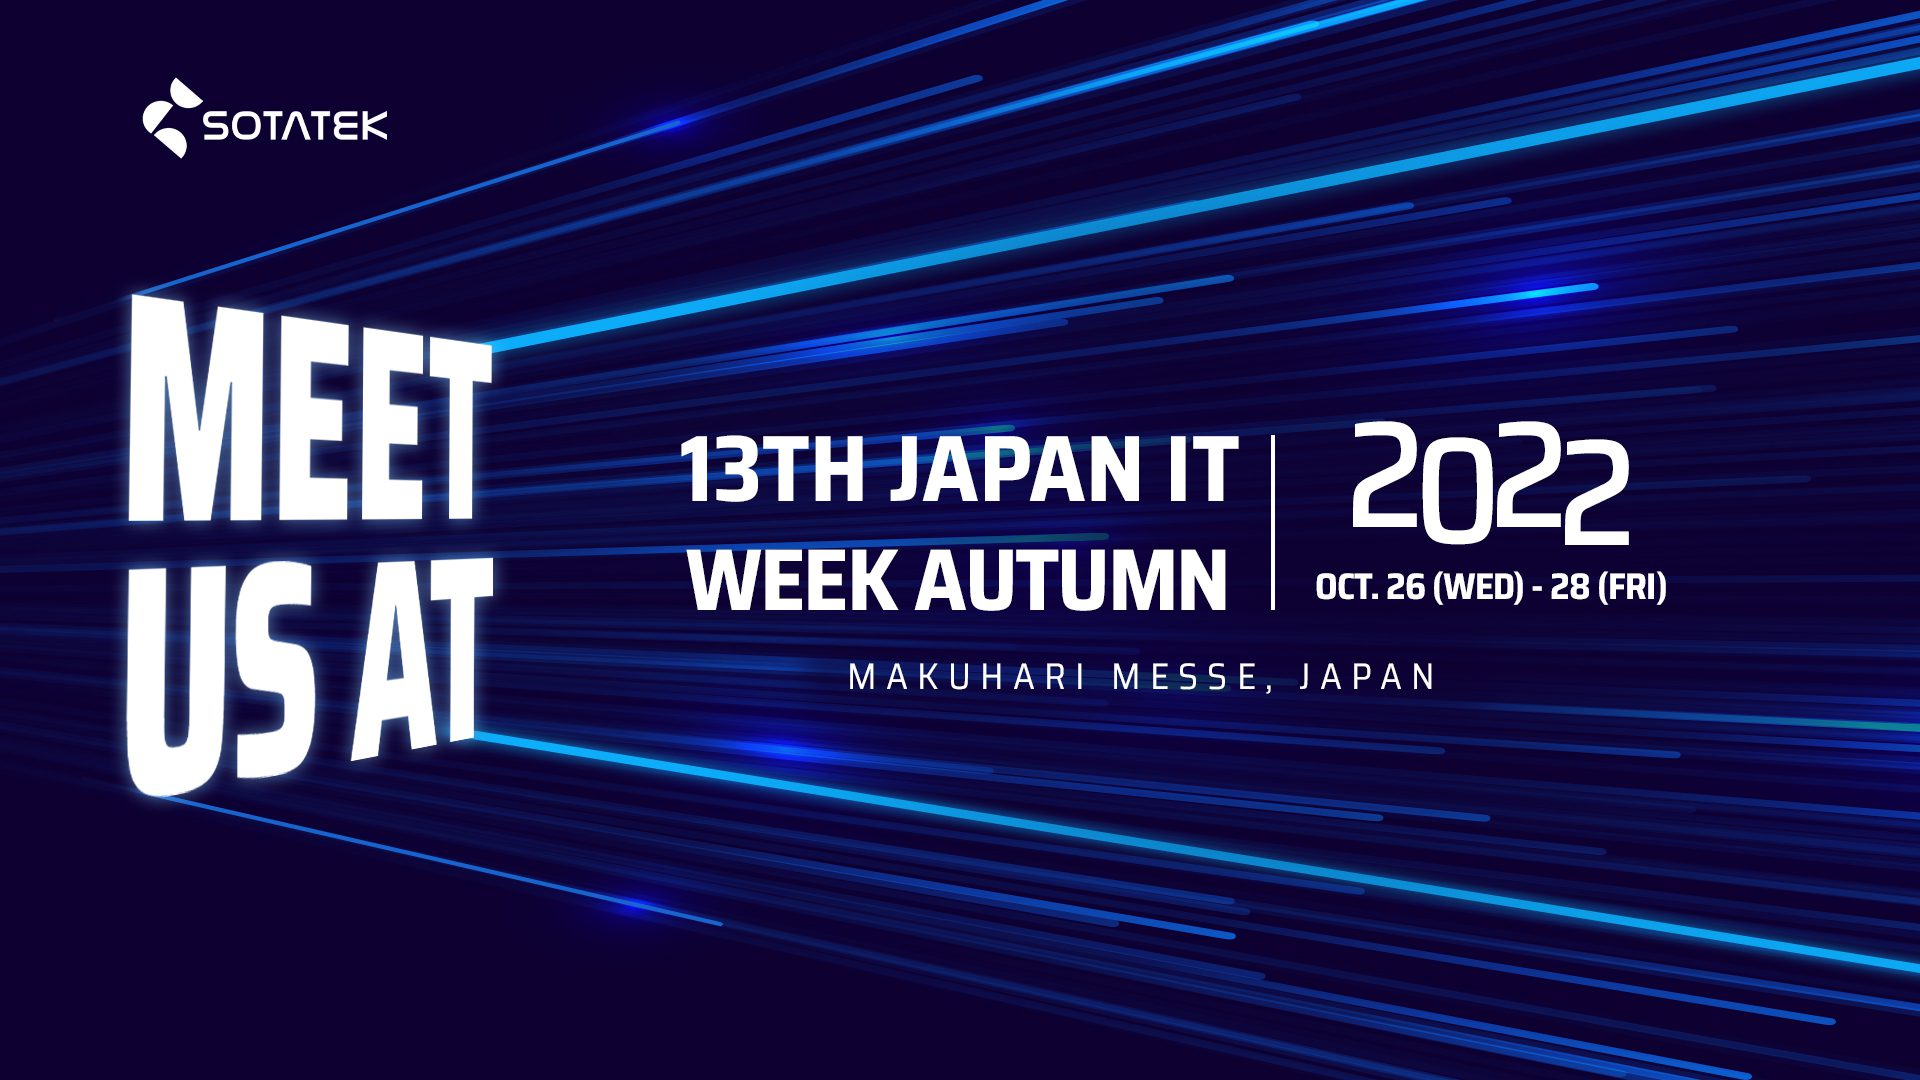 Meet-SotaTek-at-Japan-IT-Week-Autumn-2022